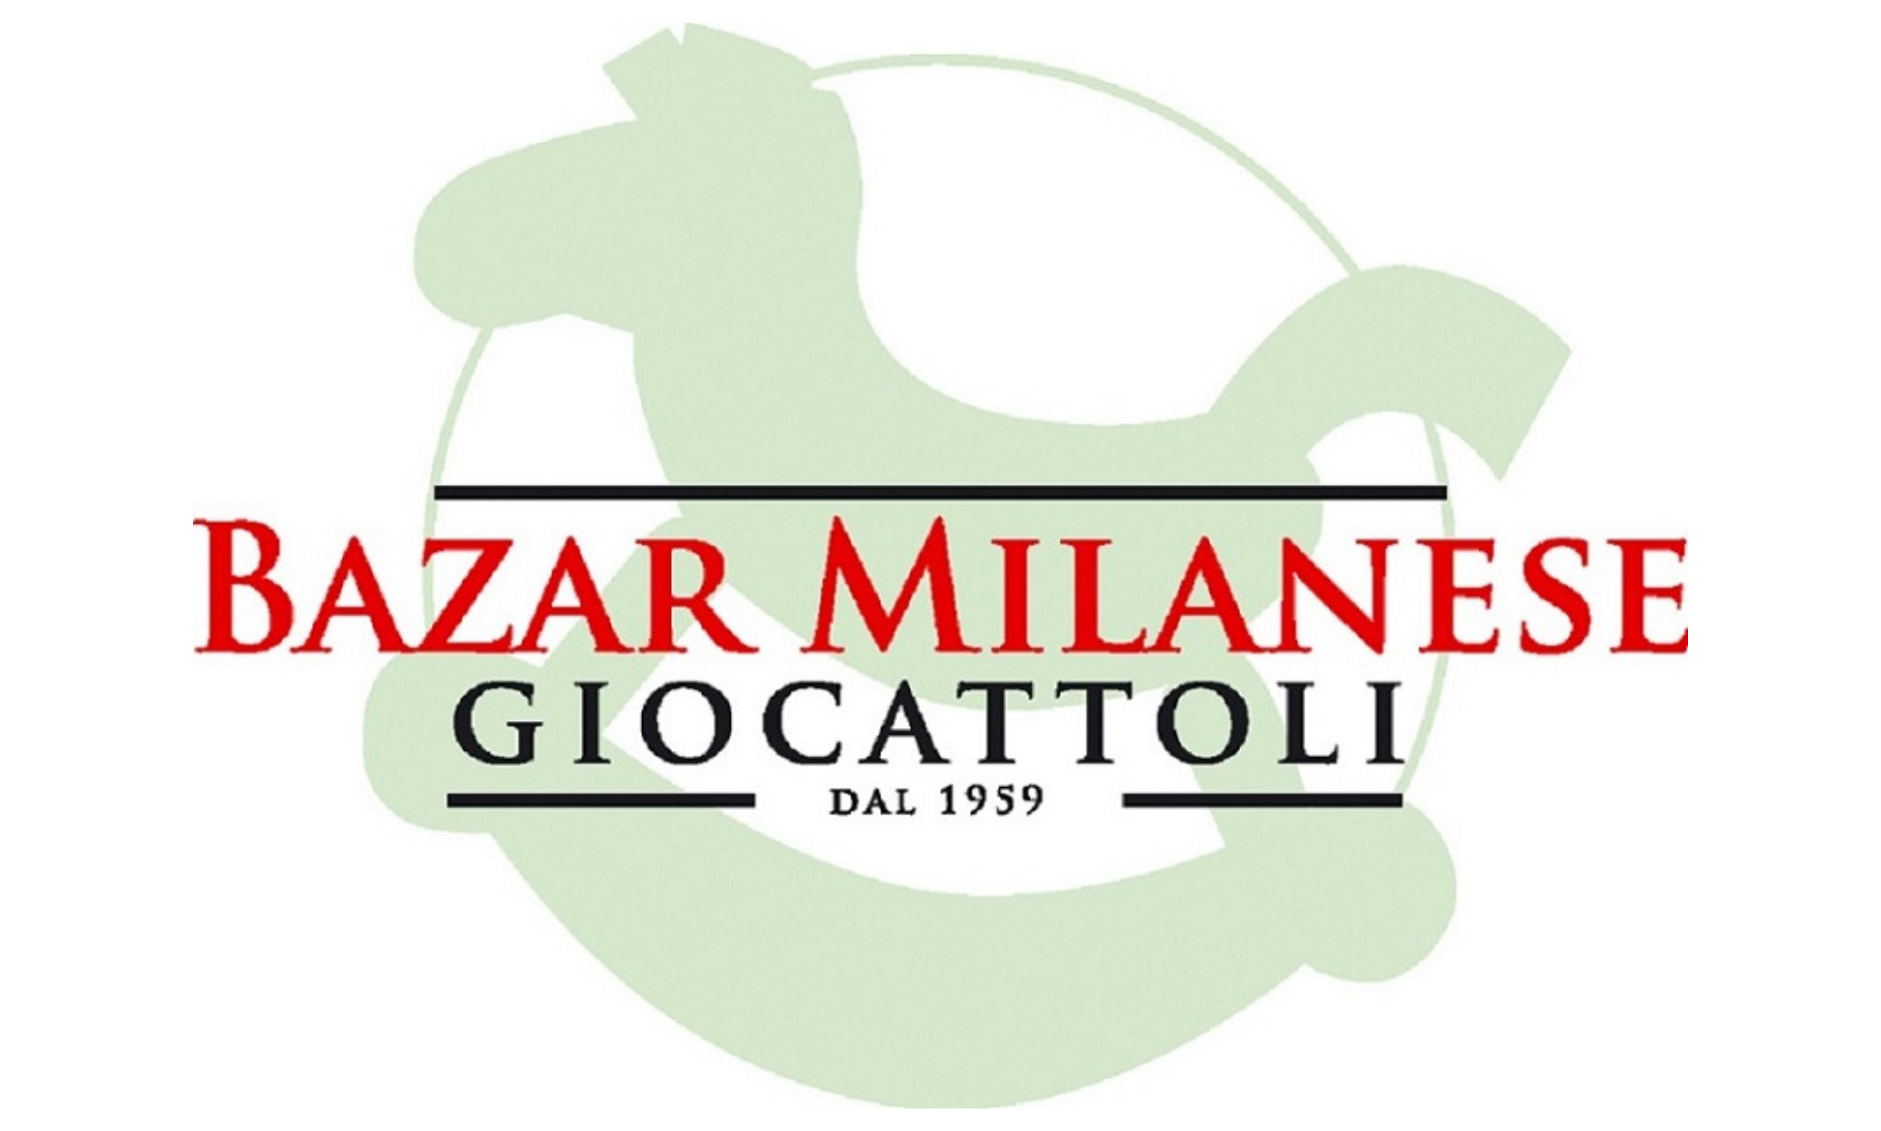 Bazar Milanese Giocattoli dal 1959